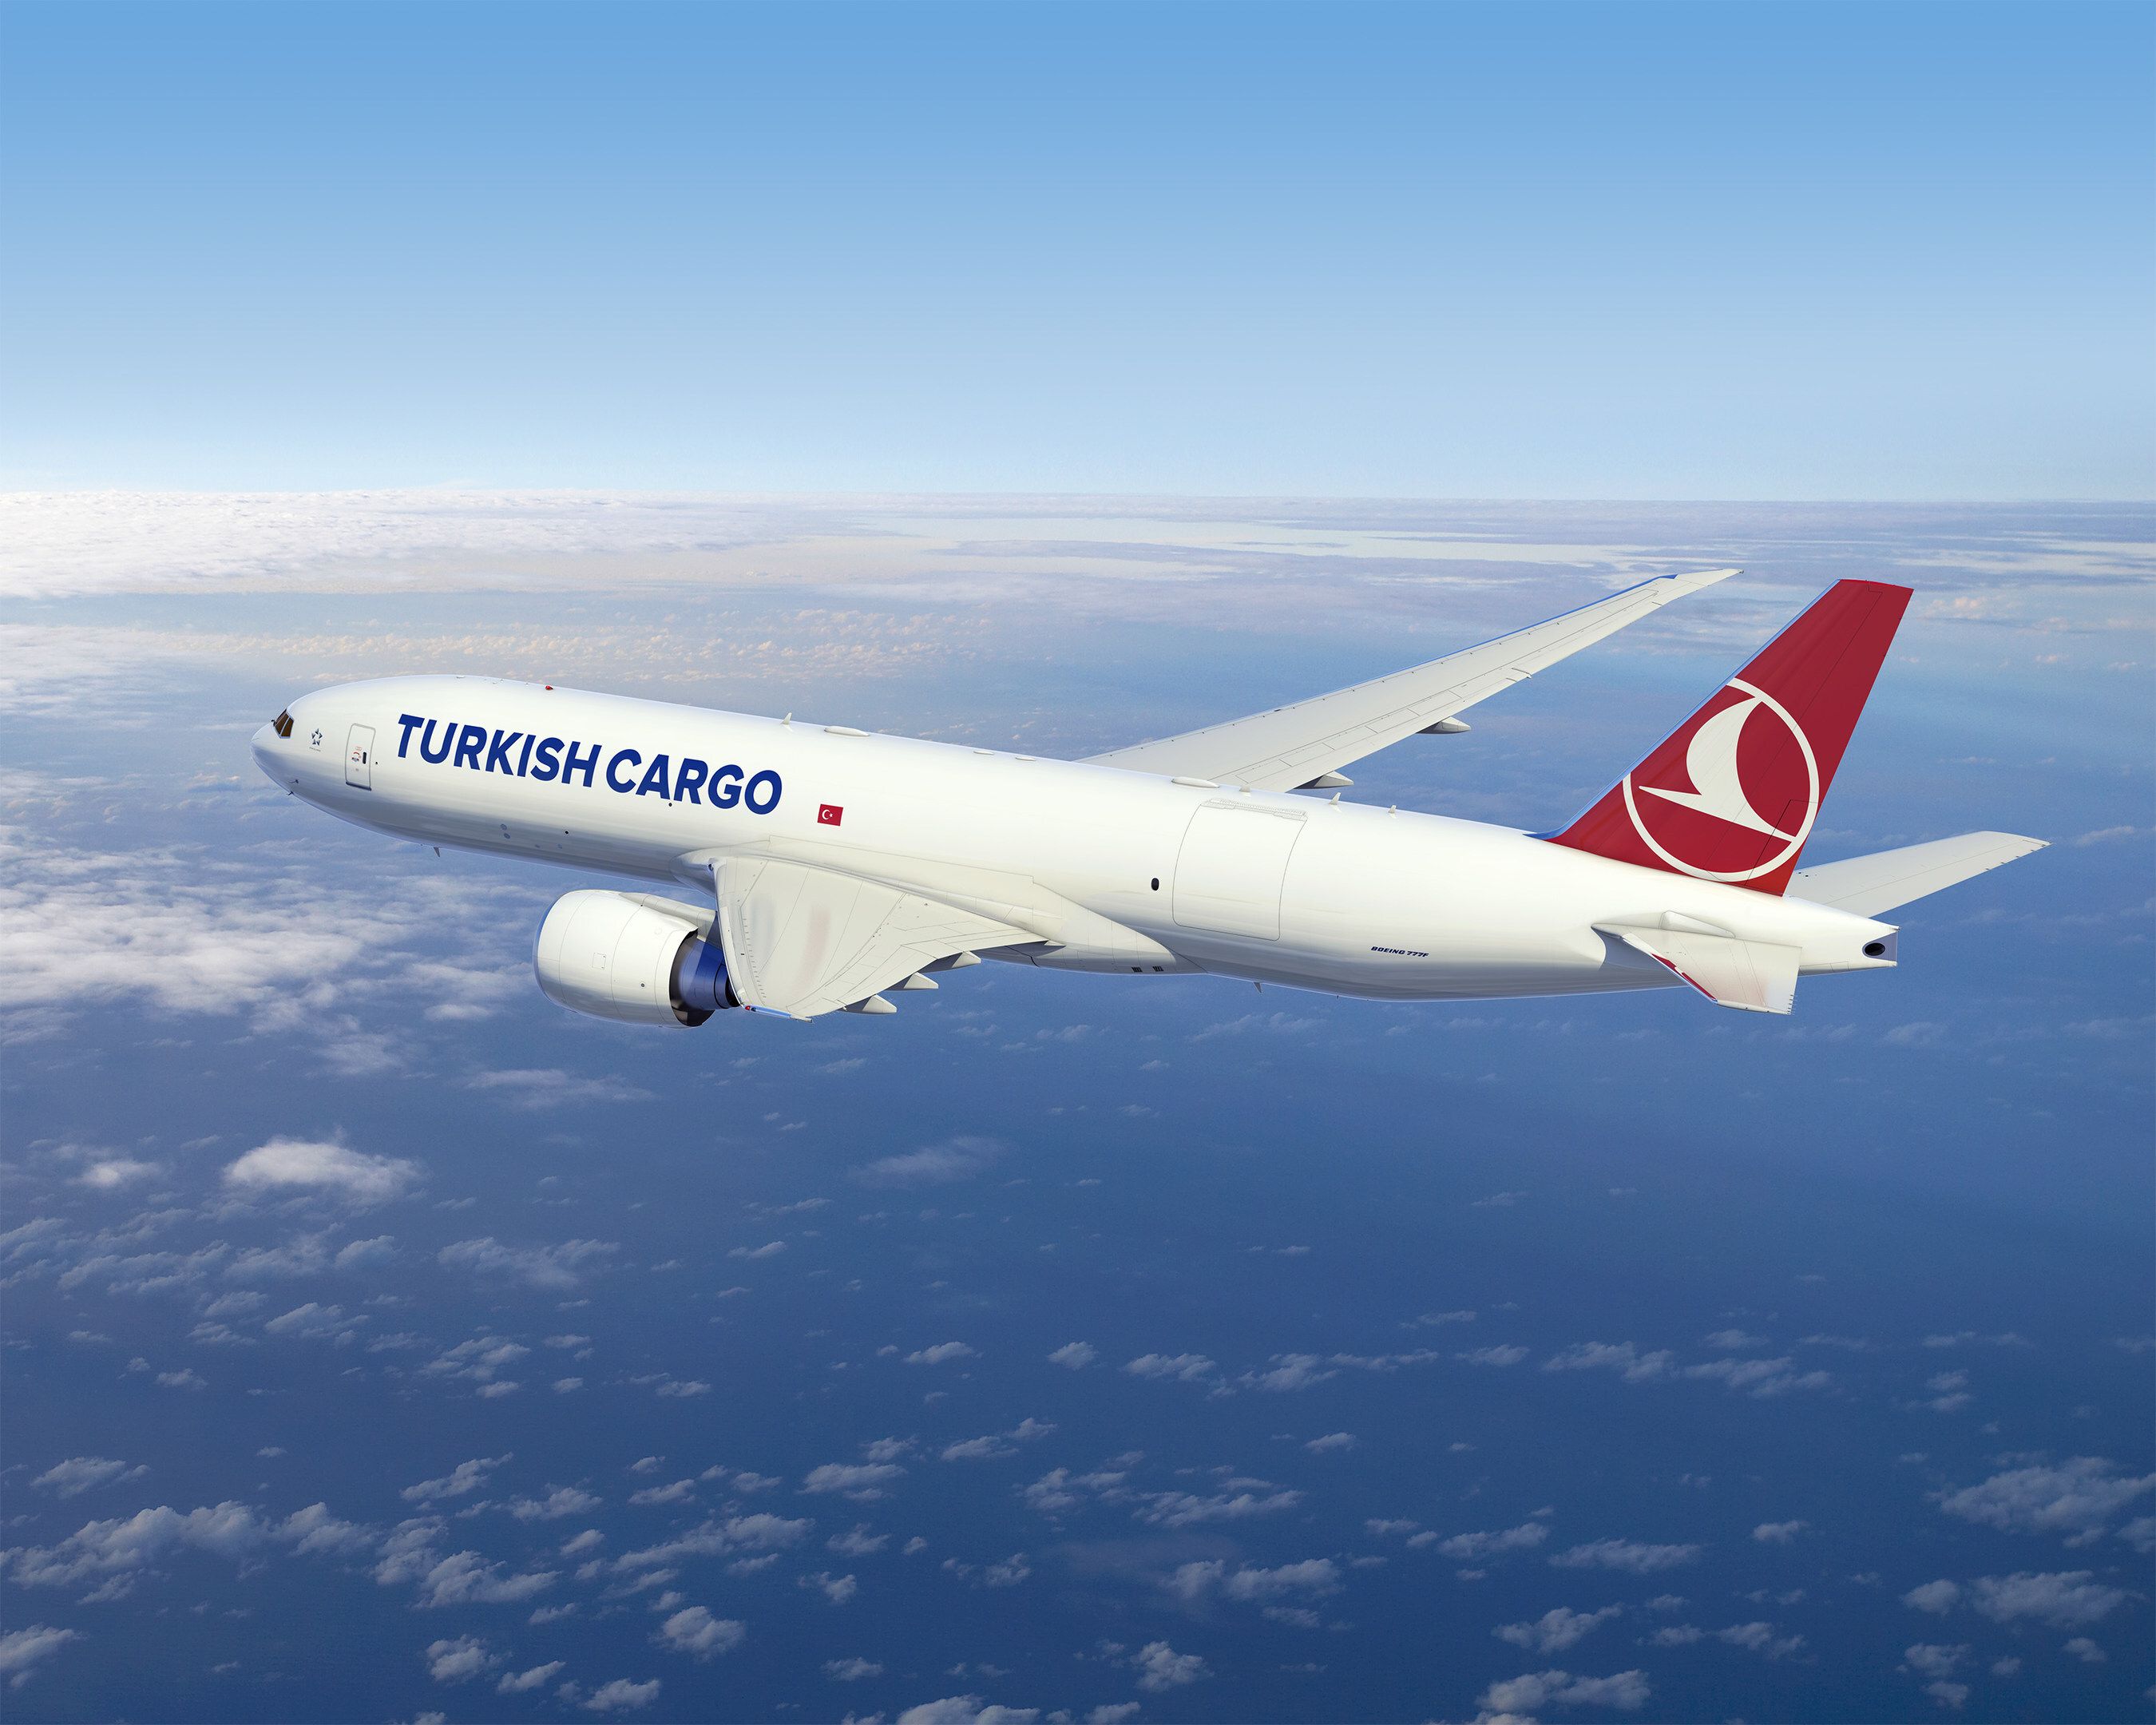 Turkish Airlines Cargo Boeing 777F rendering